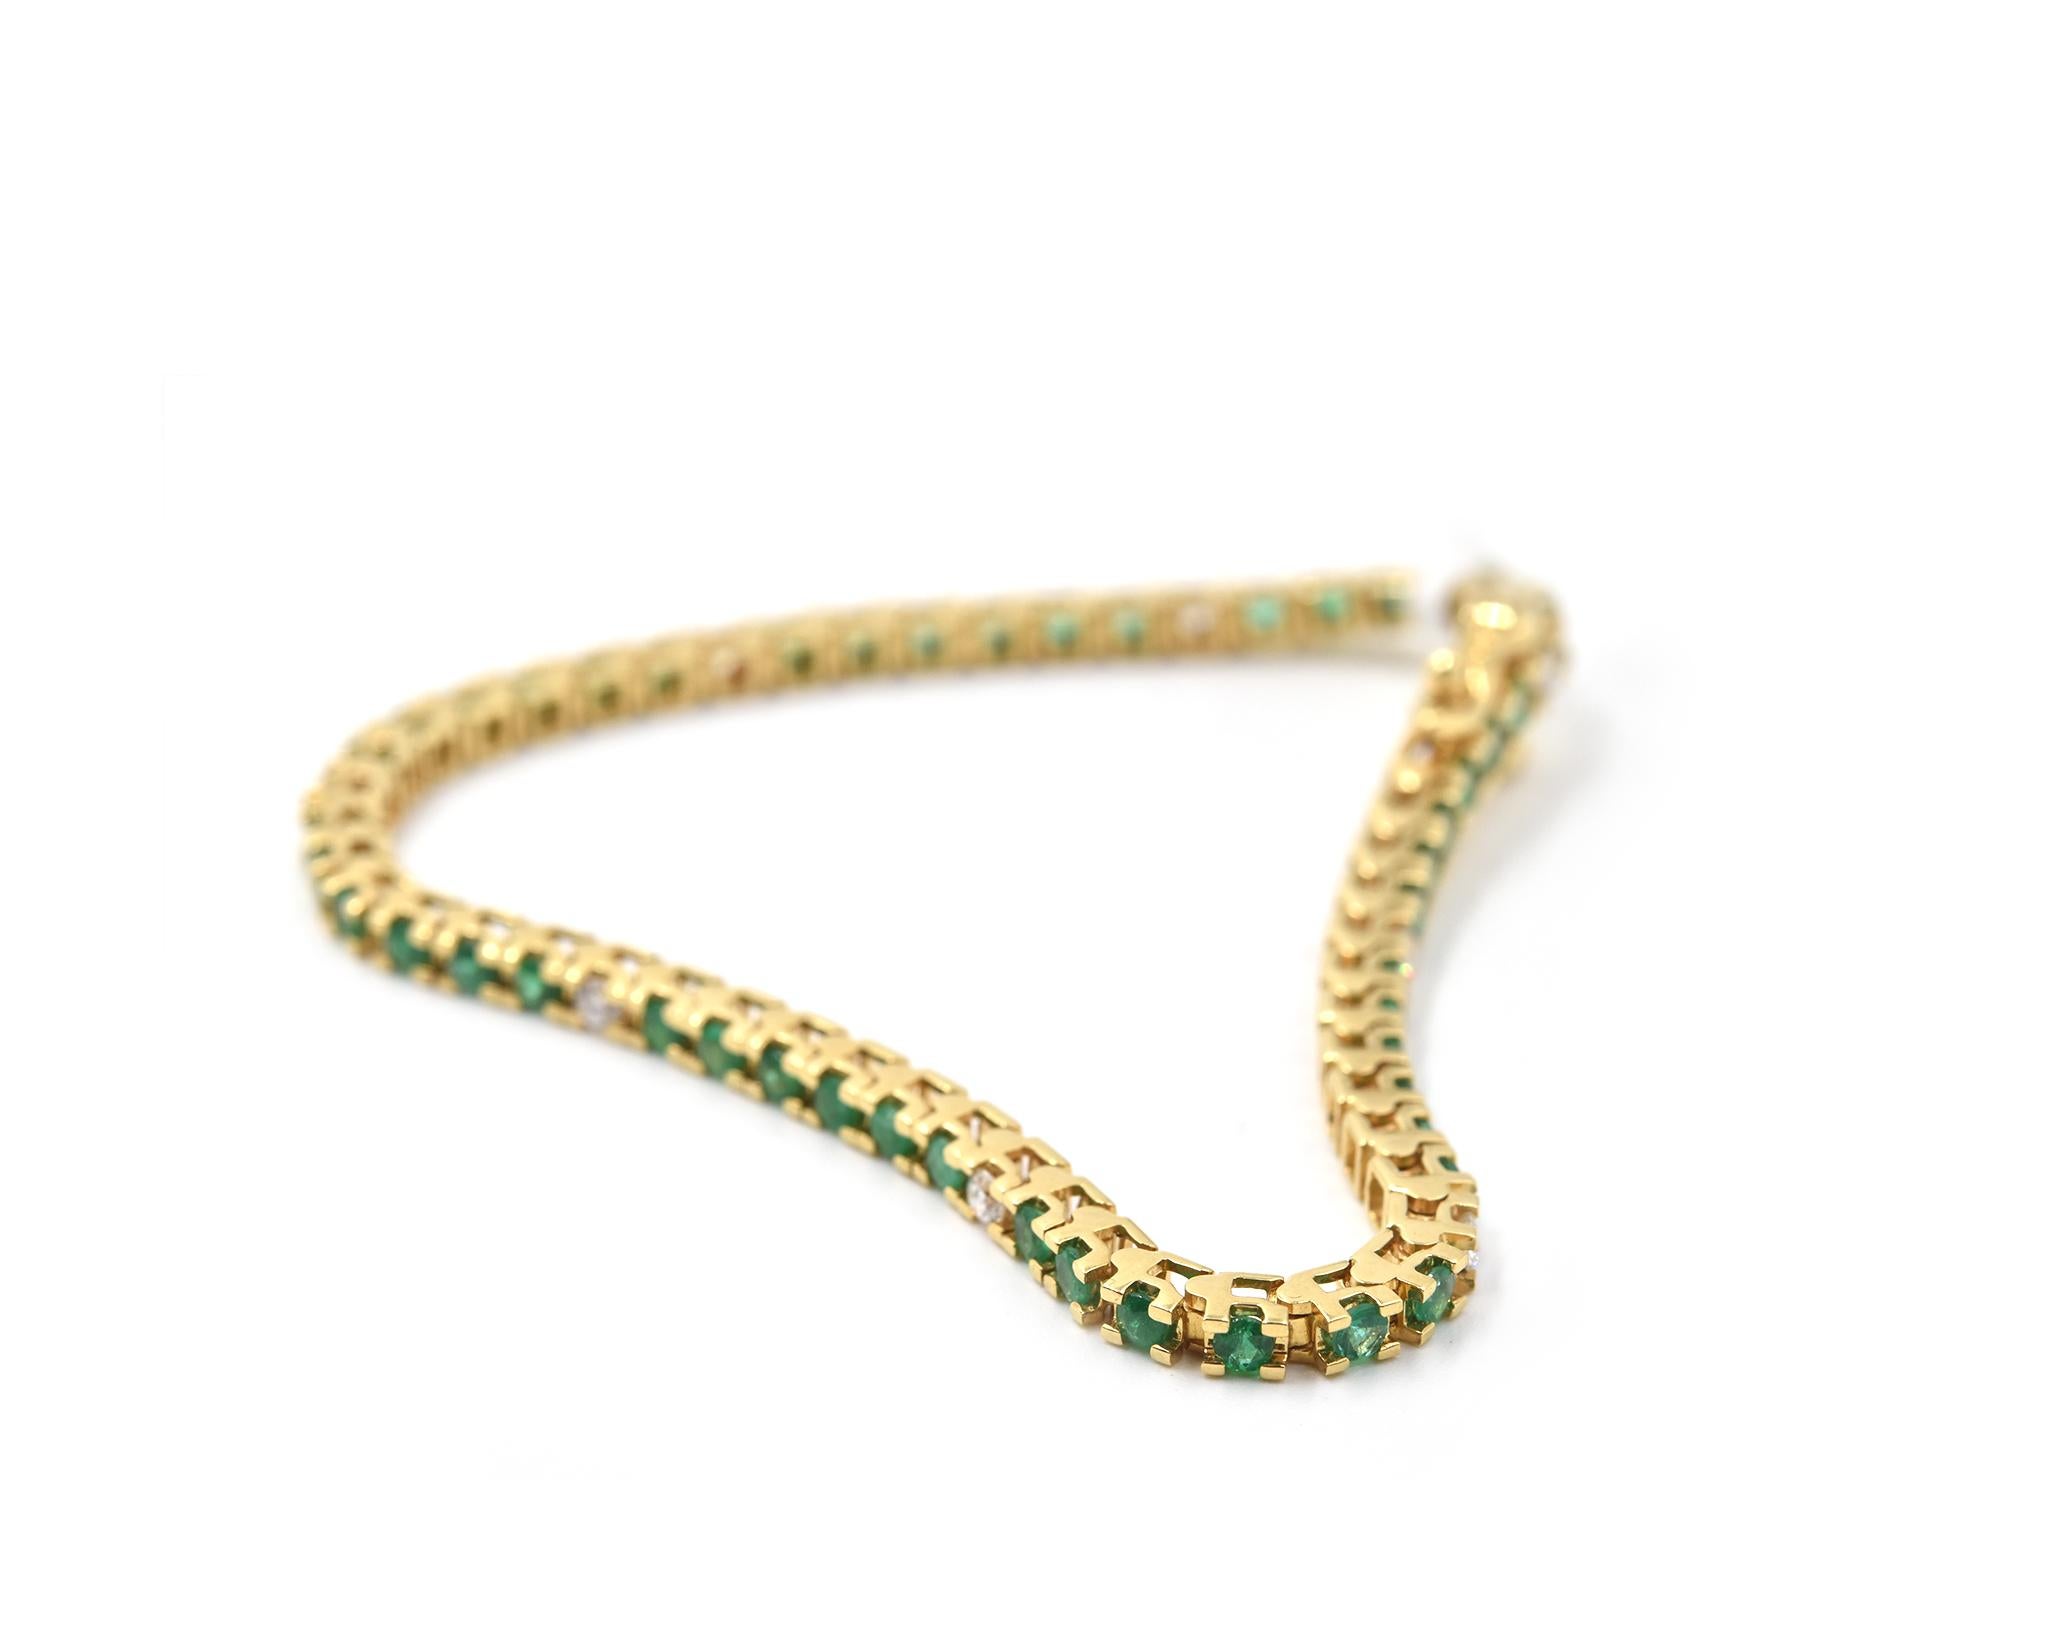 Designer: custom design
Material: 18k yellow gold
Emeralds: round cut 2.06 carat weight
Diamonds: brilliant cut round 0.30 carat weight
Dimensions: bracelet is 7-inch long
Weight: 12.7 grams
